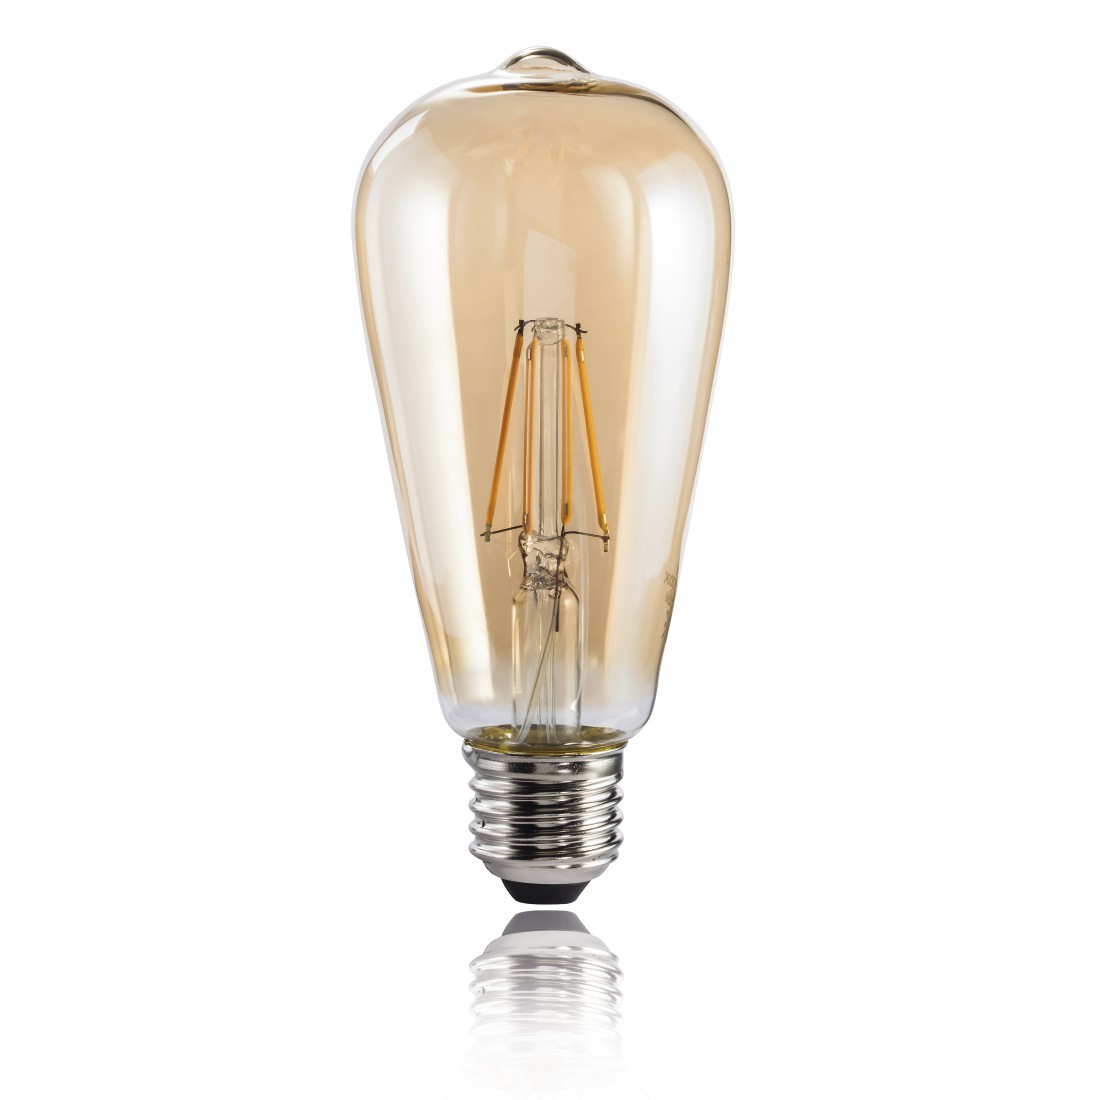 abx2 High-Res Image 2 - Xavax, Fil LED, E27, 685lm rempl. 53W, lampe vintage régl., ambre, blc chd